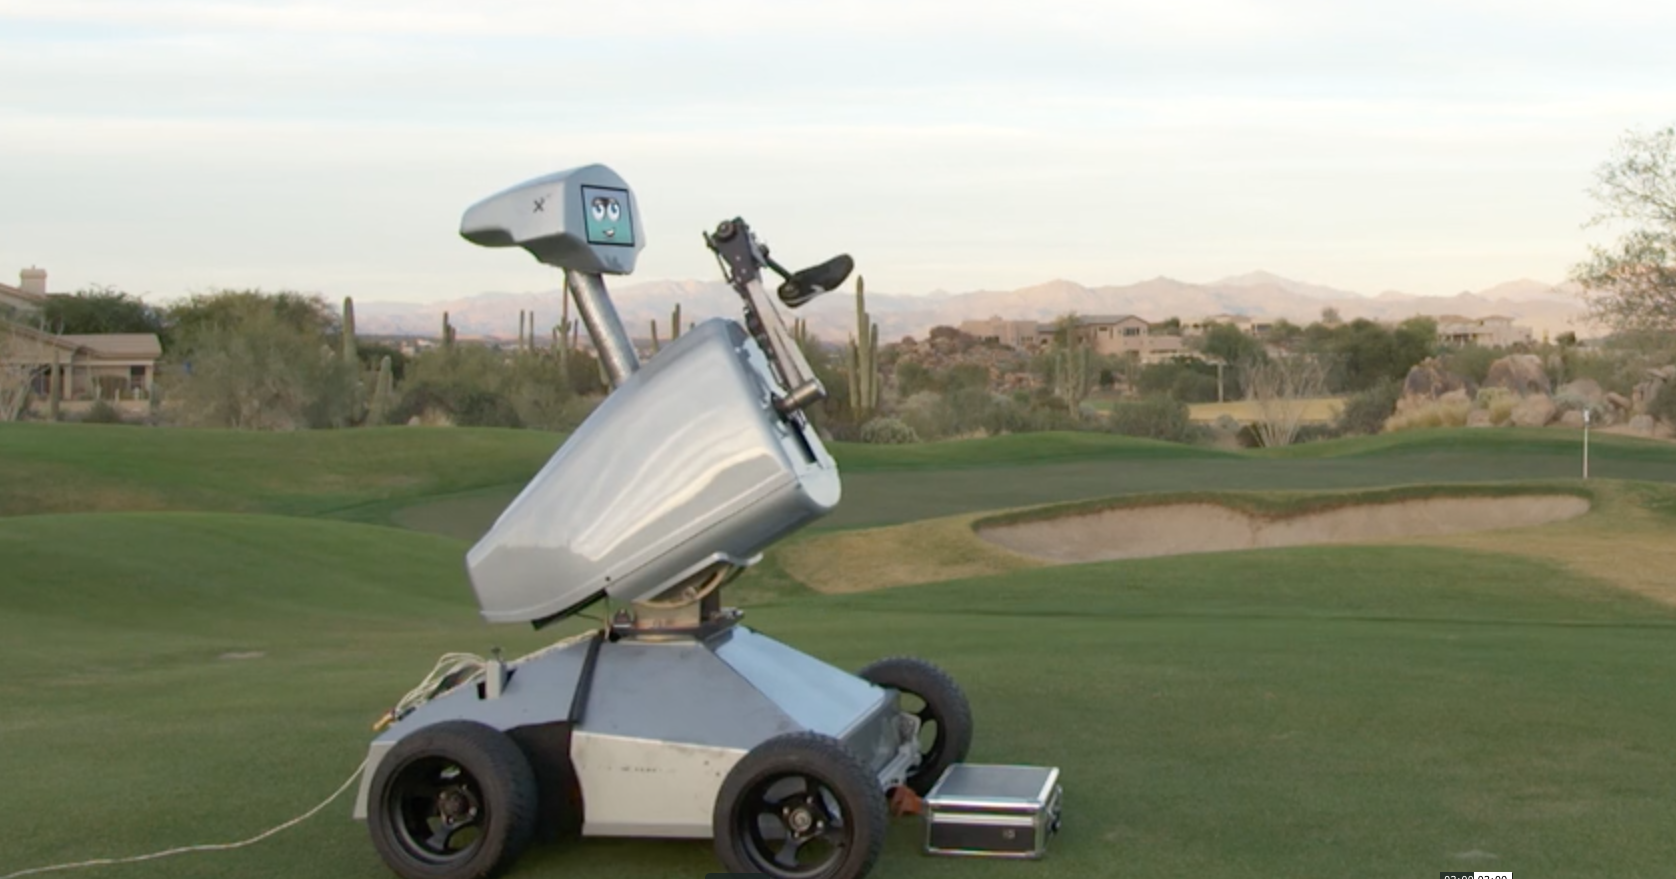 Golf robot LDRIC sinks a hole-in-one at PGA event - CBS News1676 x 879